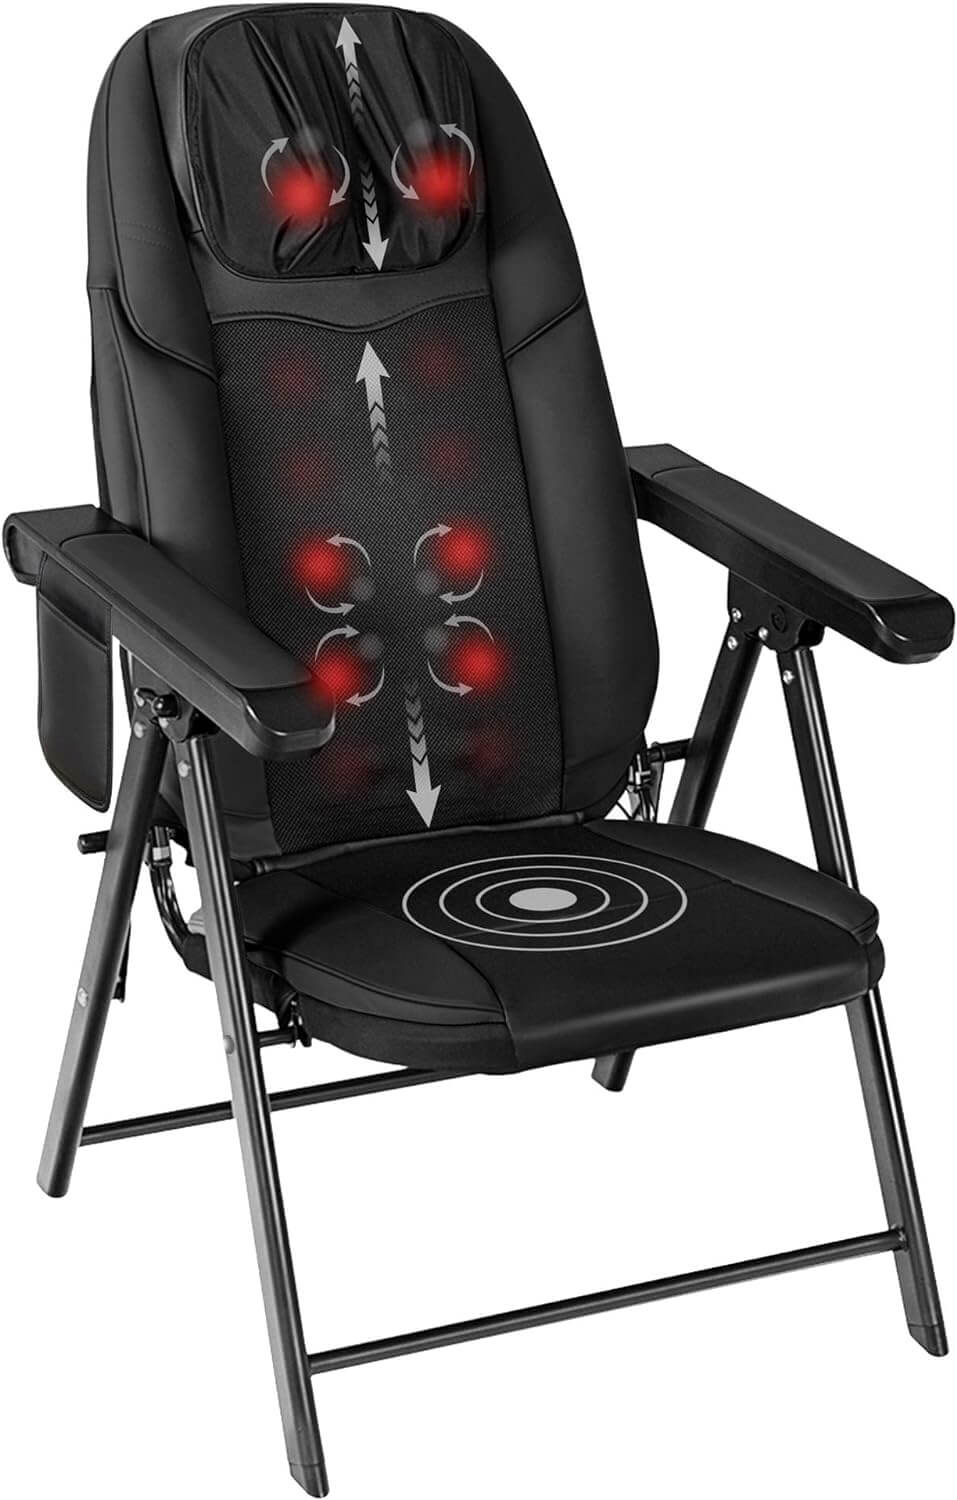 Comfier Portable Folding Shiatsu Neck And Back Massage Chair